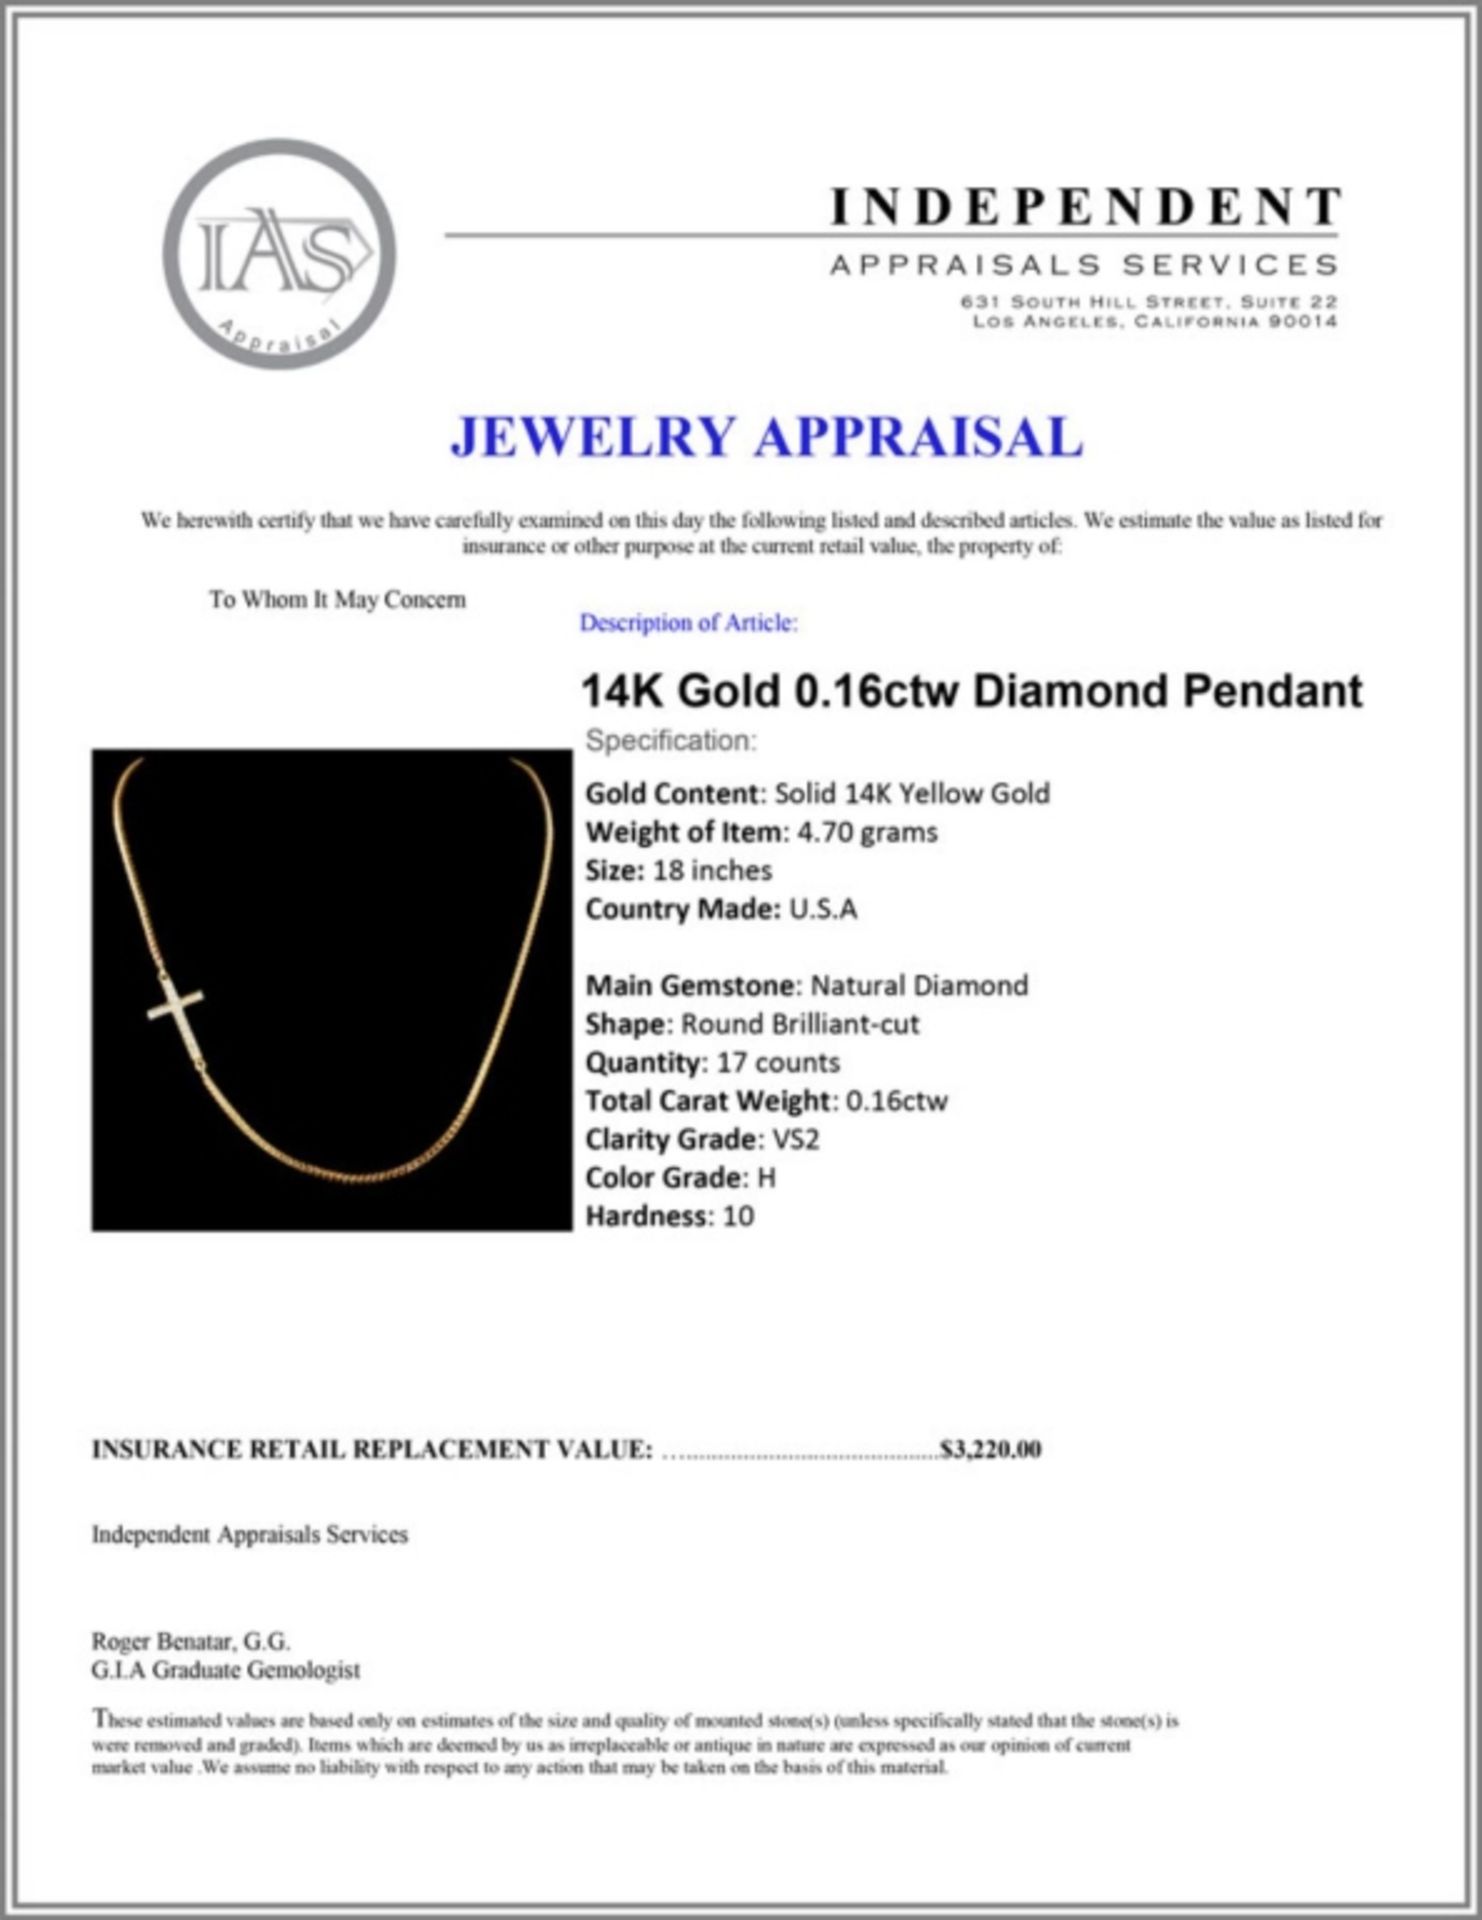 14K Gold 0.16ctw Diamond Pendant - Image 4 of 4